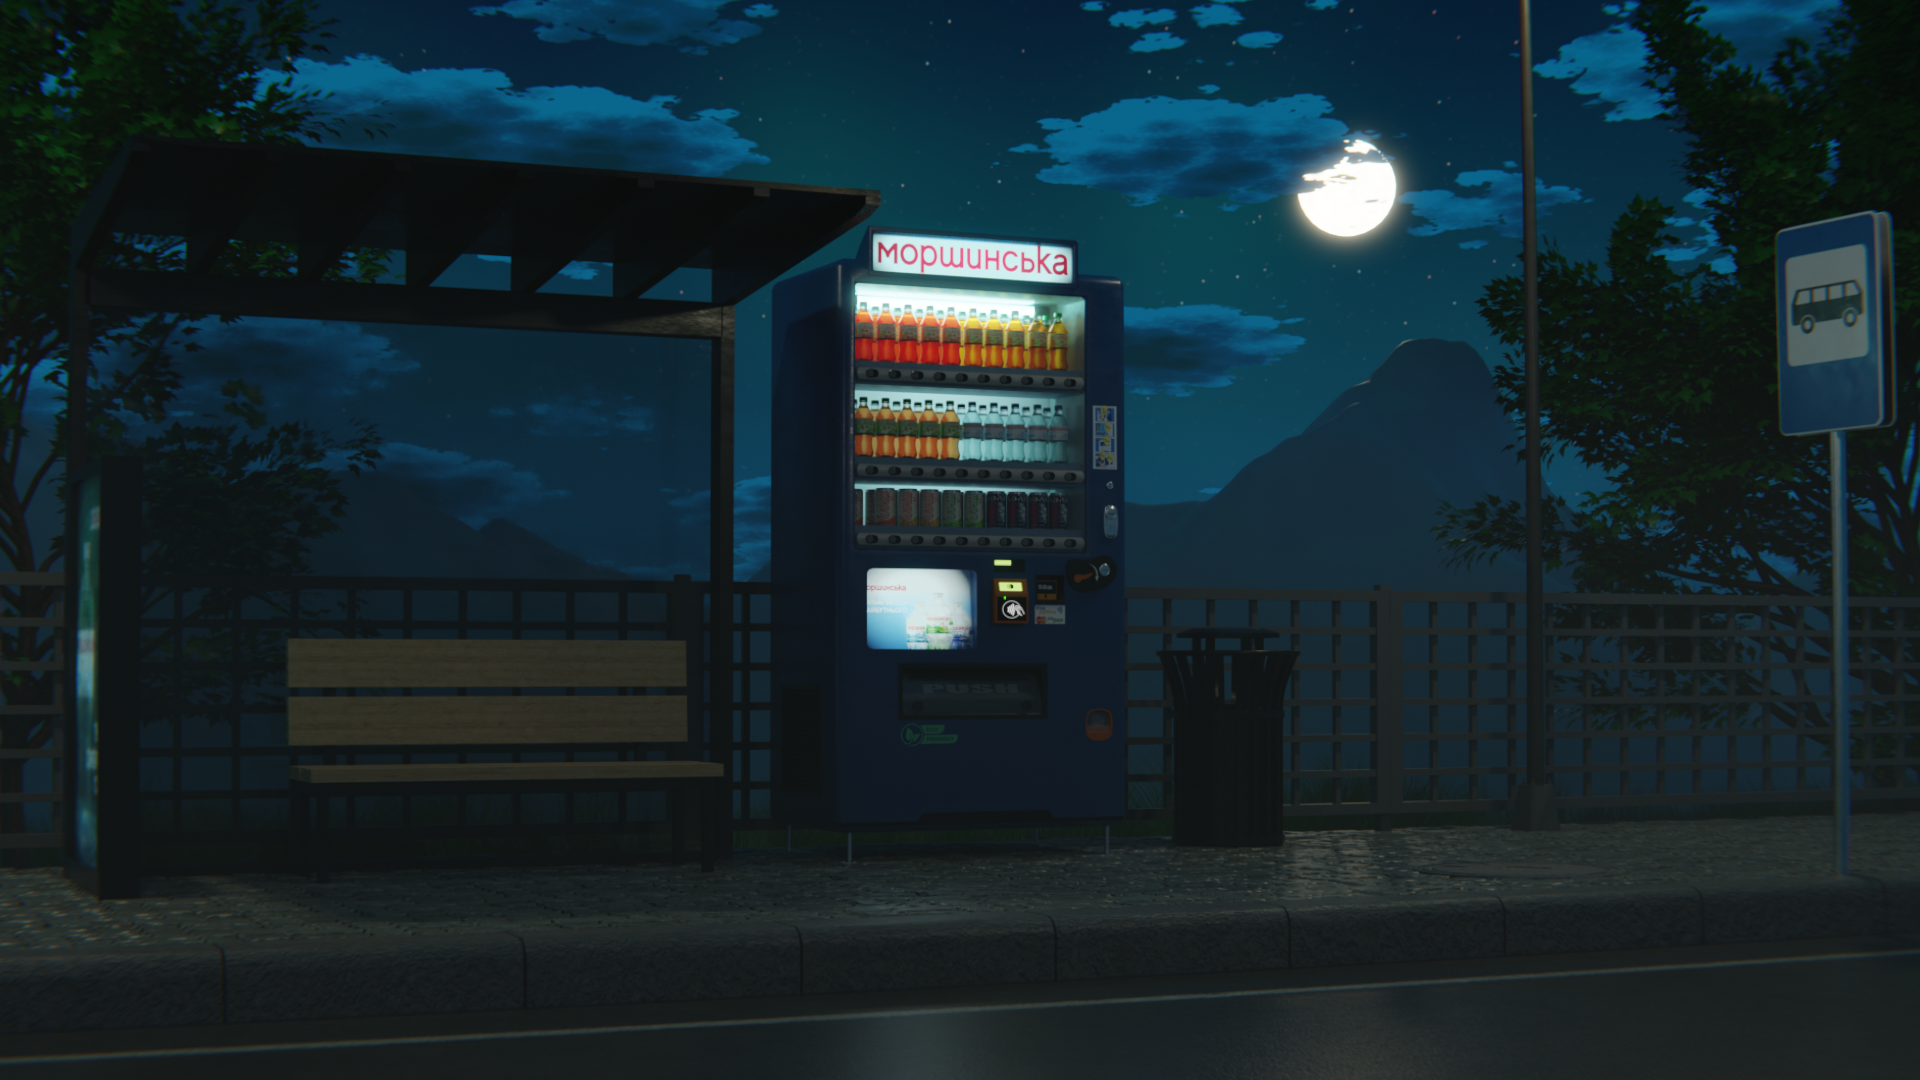 General 1920x1080 vending machine bus stop night Blender street soda digital art sky clouds Moon signs moonlight bench trash bin fence